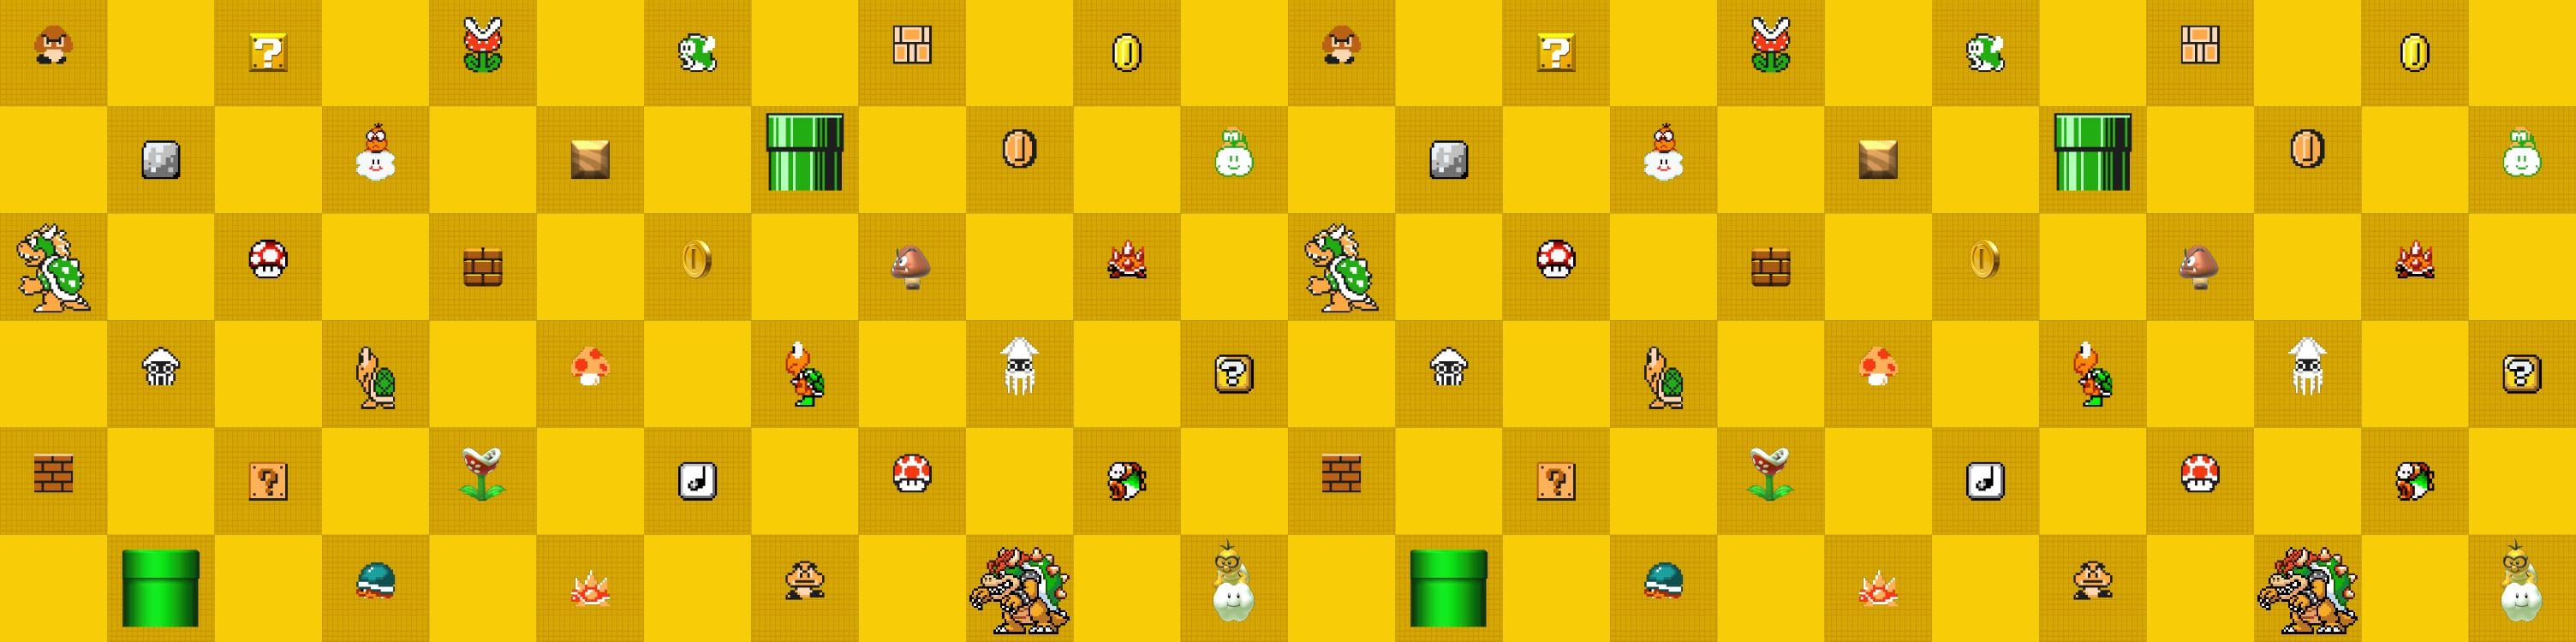 Super Mario Maker Desktop Background Wallpaper